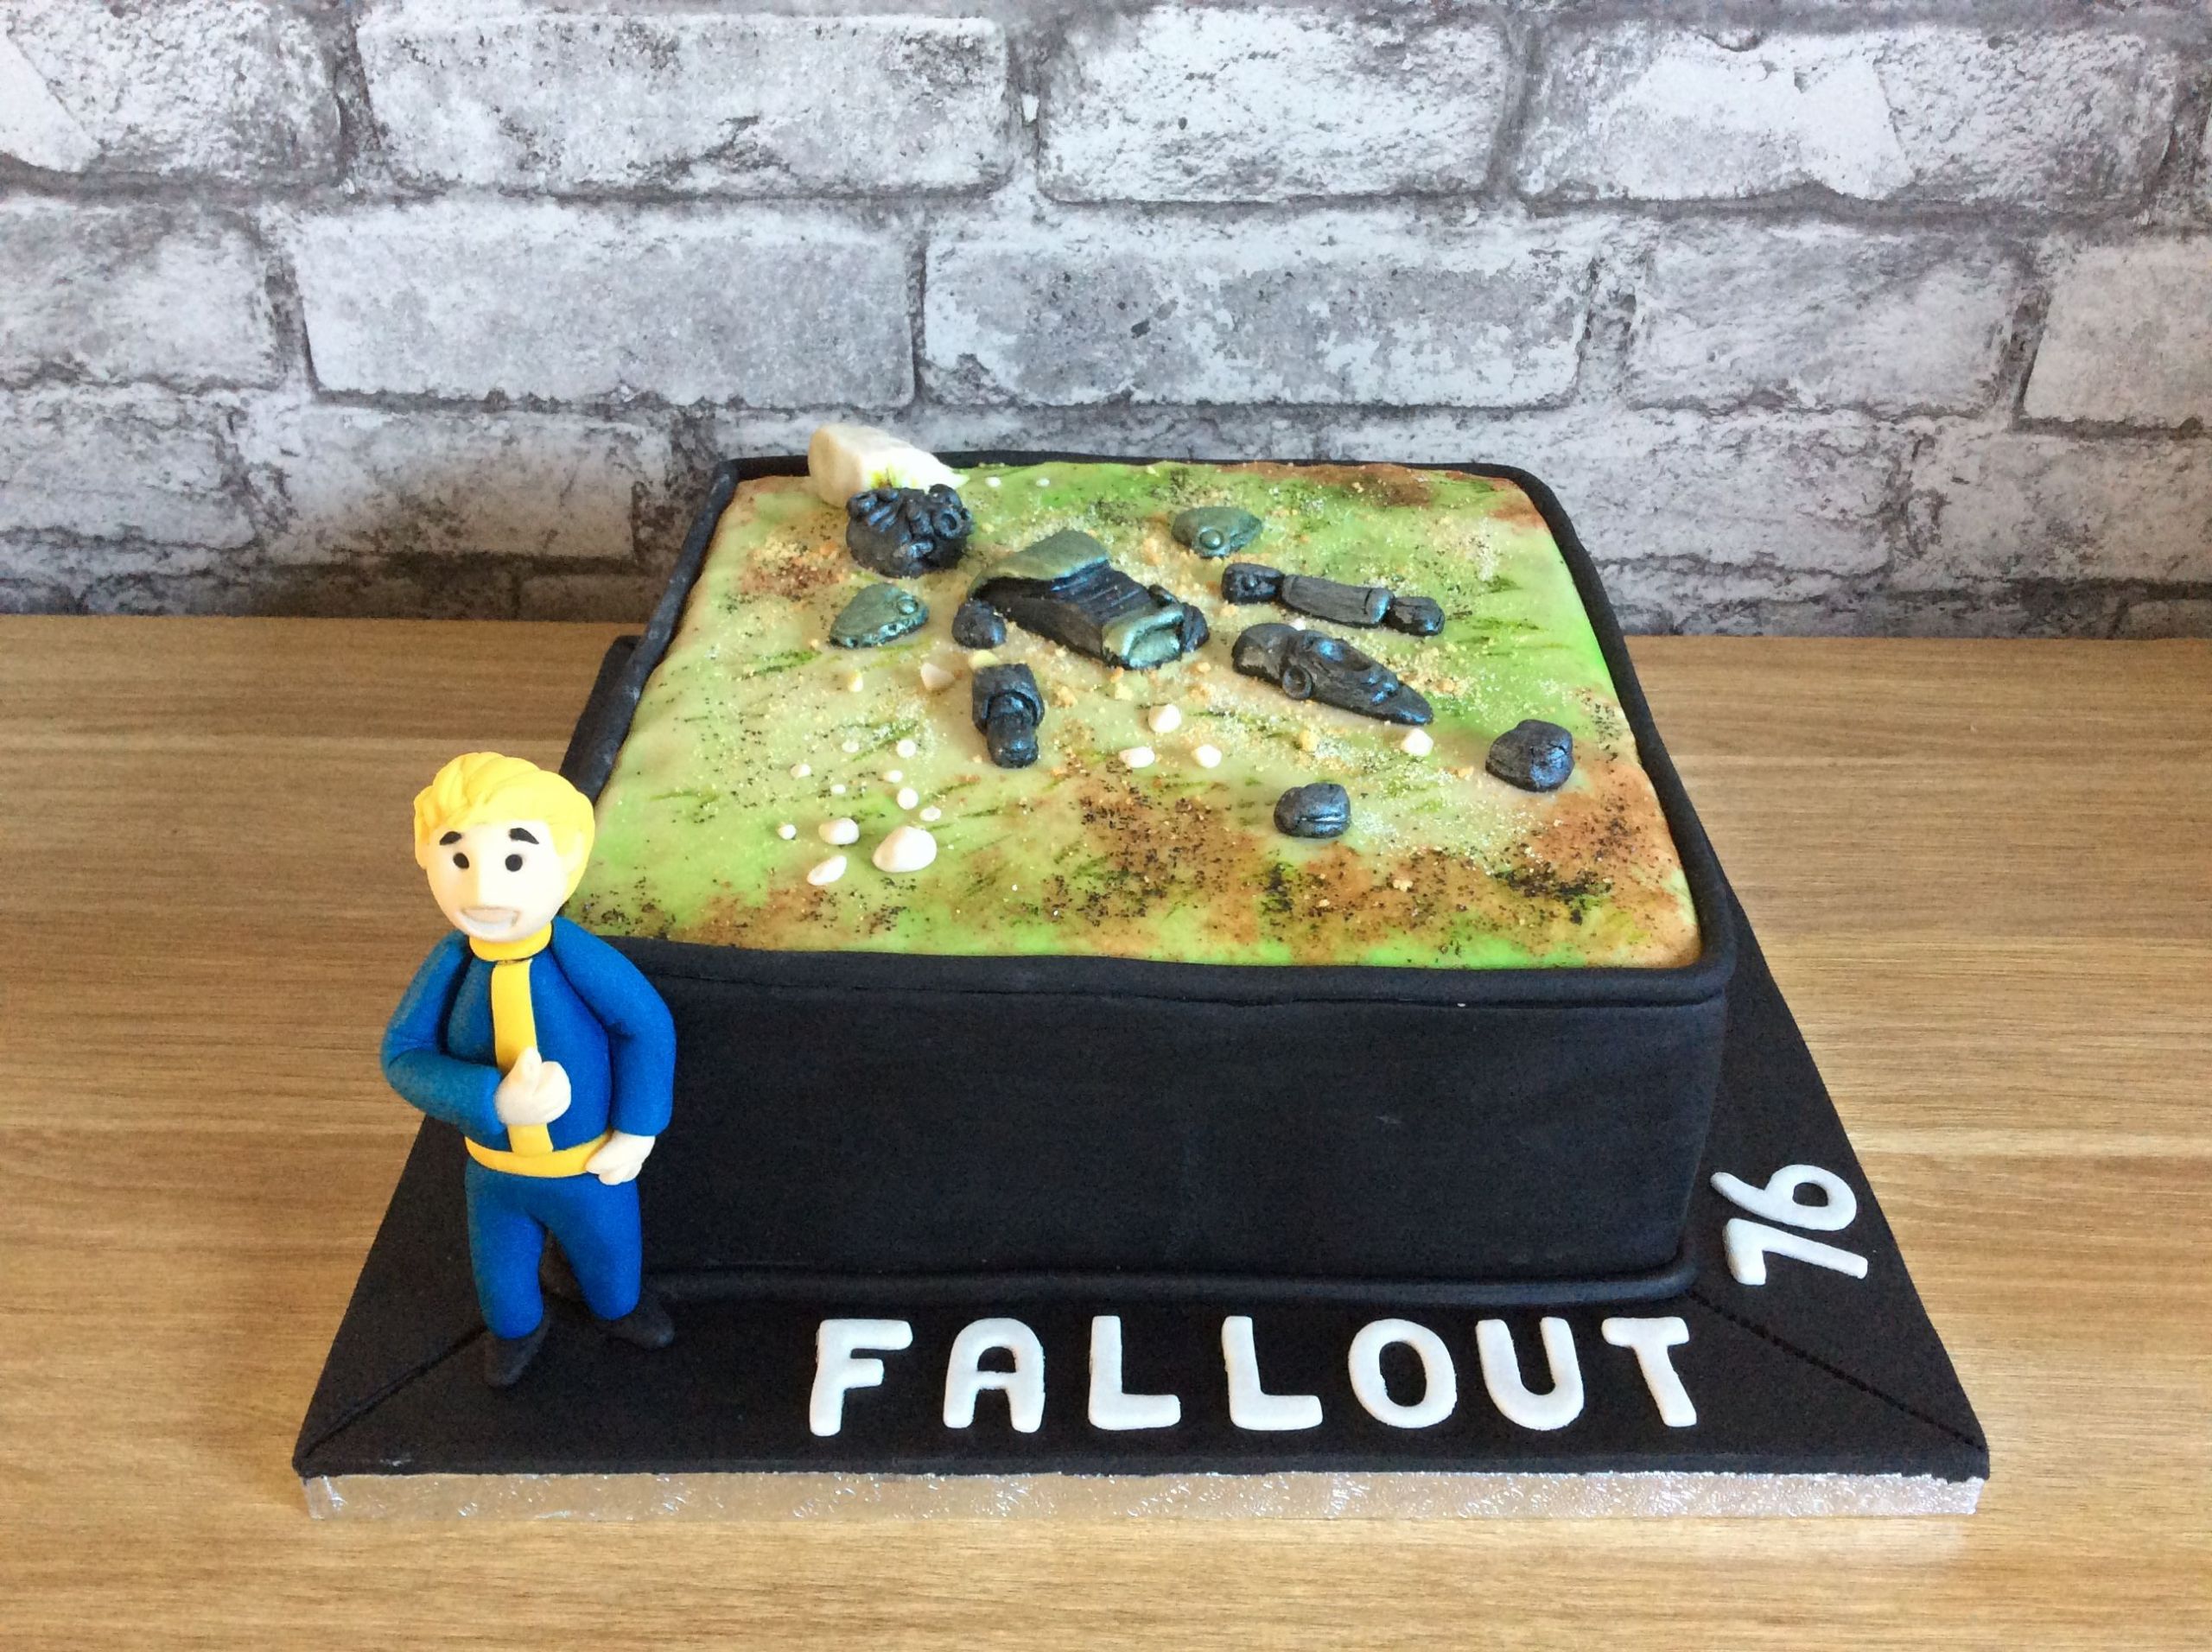 Fallout Birthday Cake
 Fallout 76 themed birthday cake x